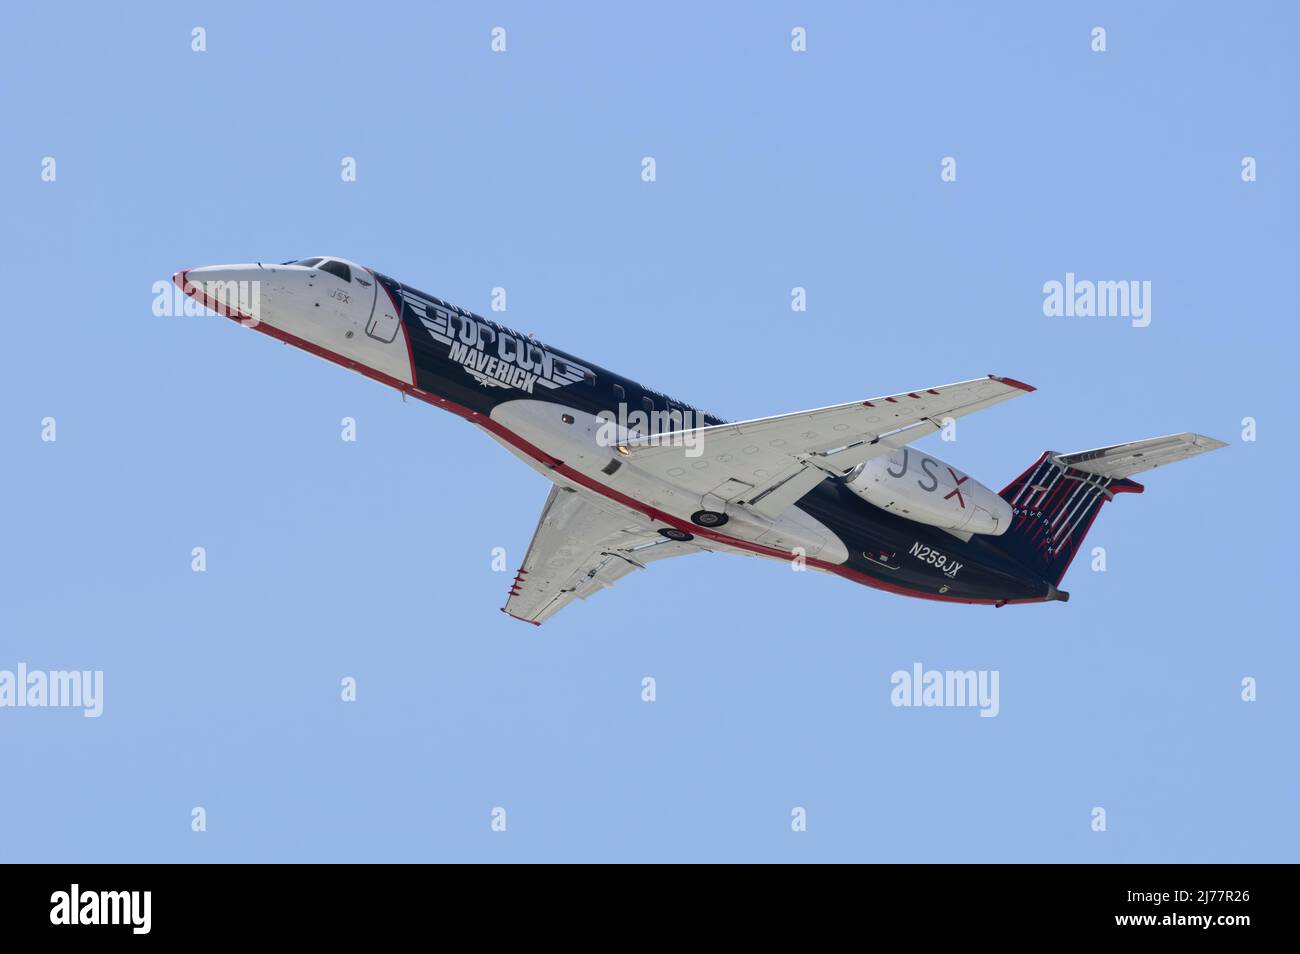 Image of JSX Embraer ERJ-135LR jet with registration N259JX. Plane shown painted in a Top Gun Maverich scheme. Stock Photo